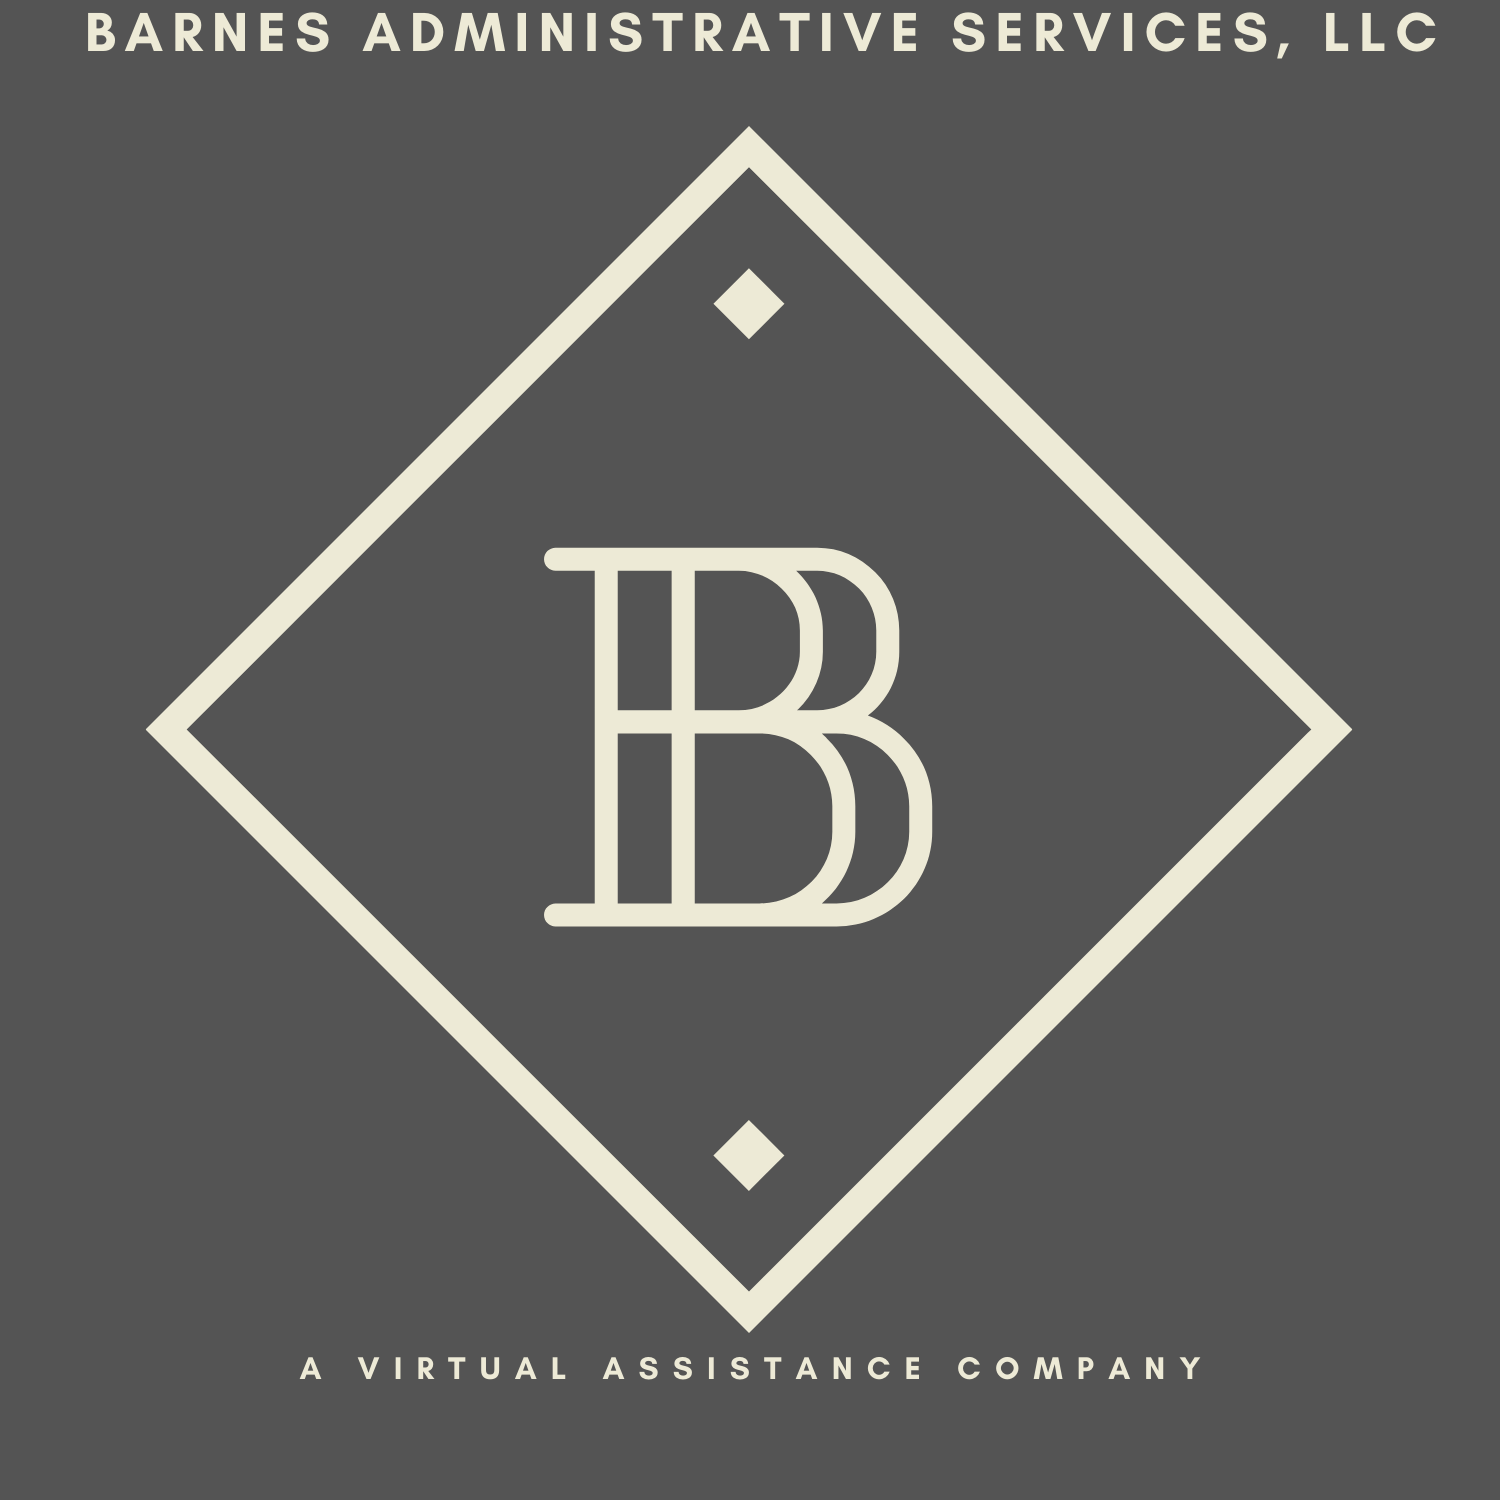 Barnes Administrative Services